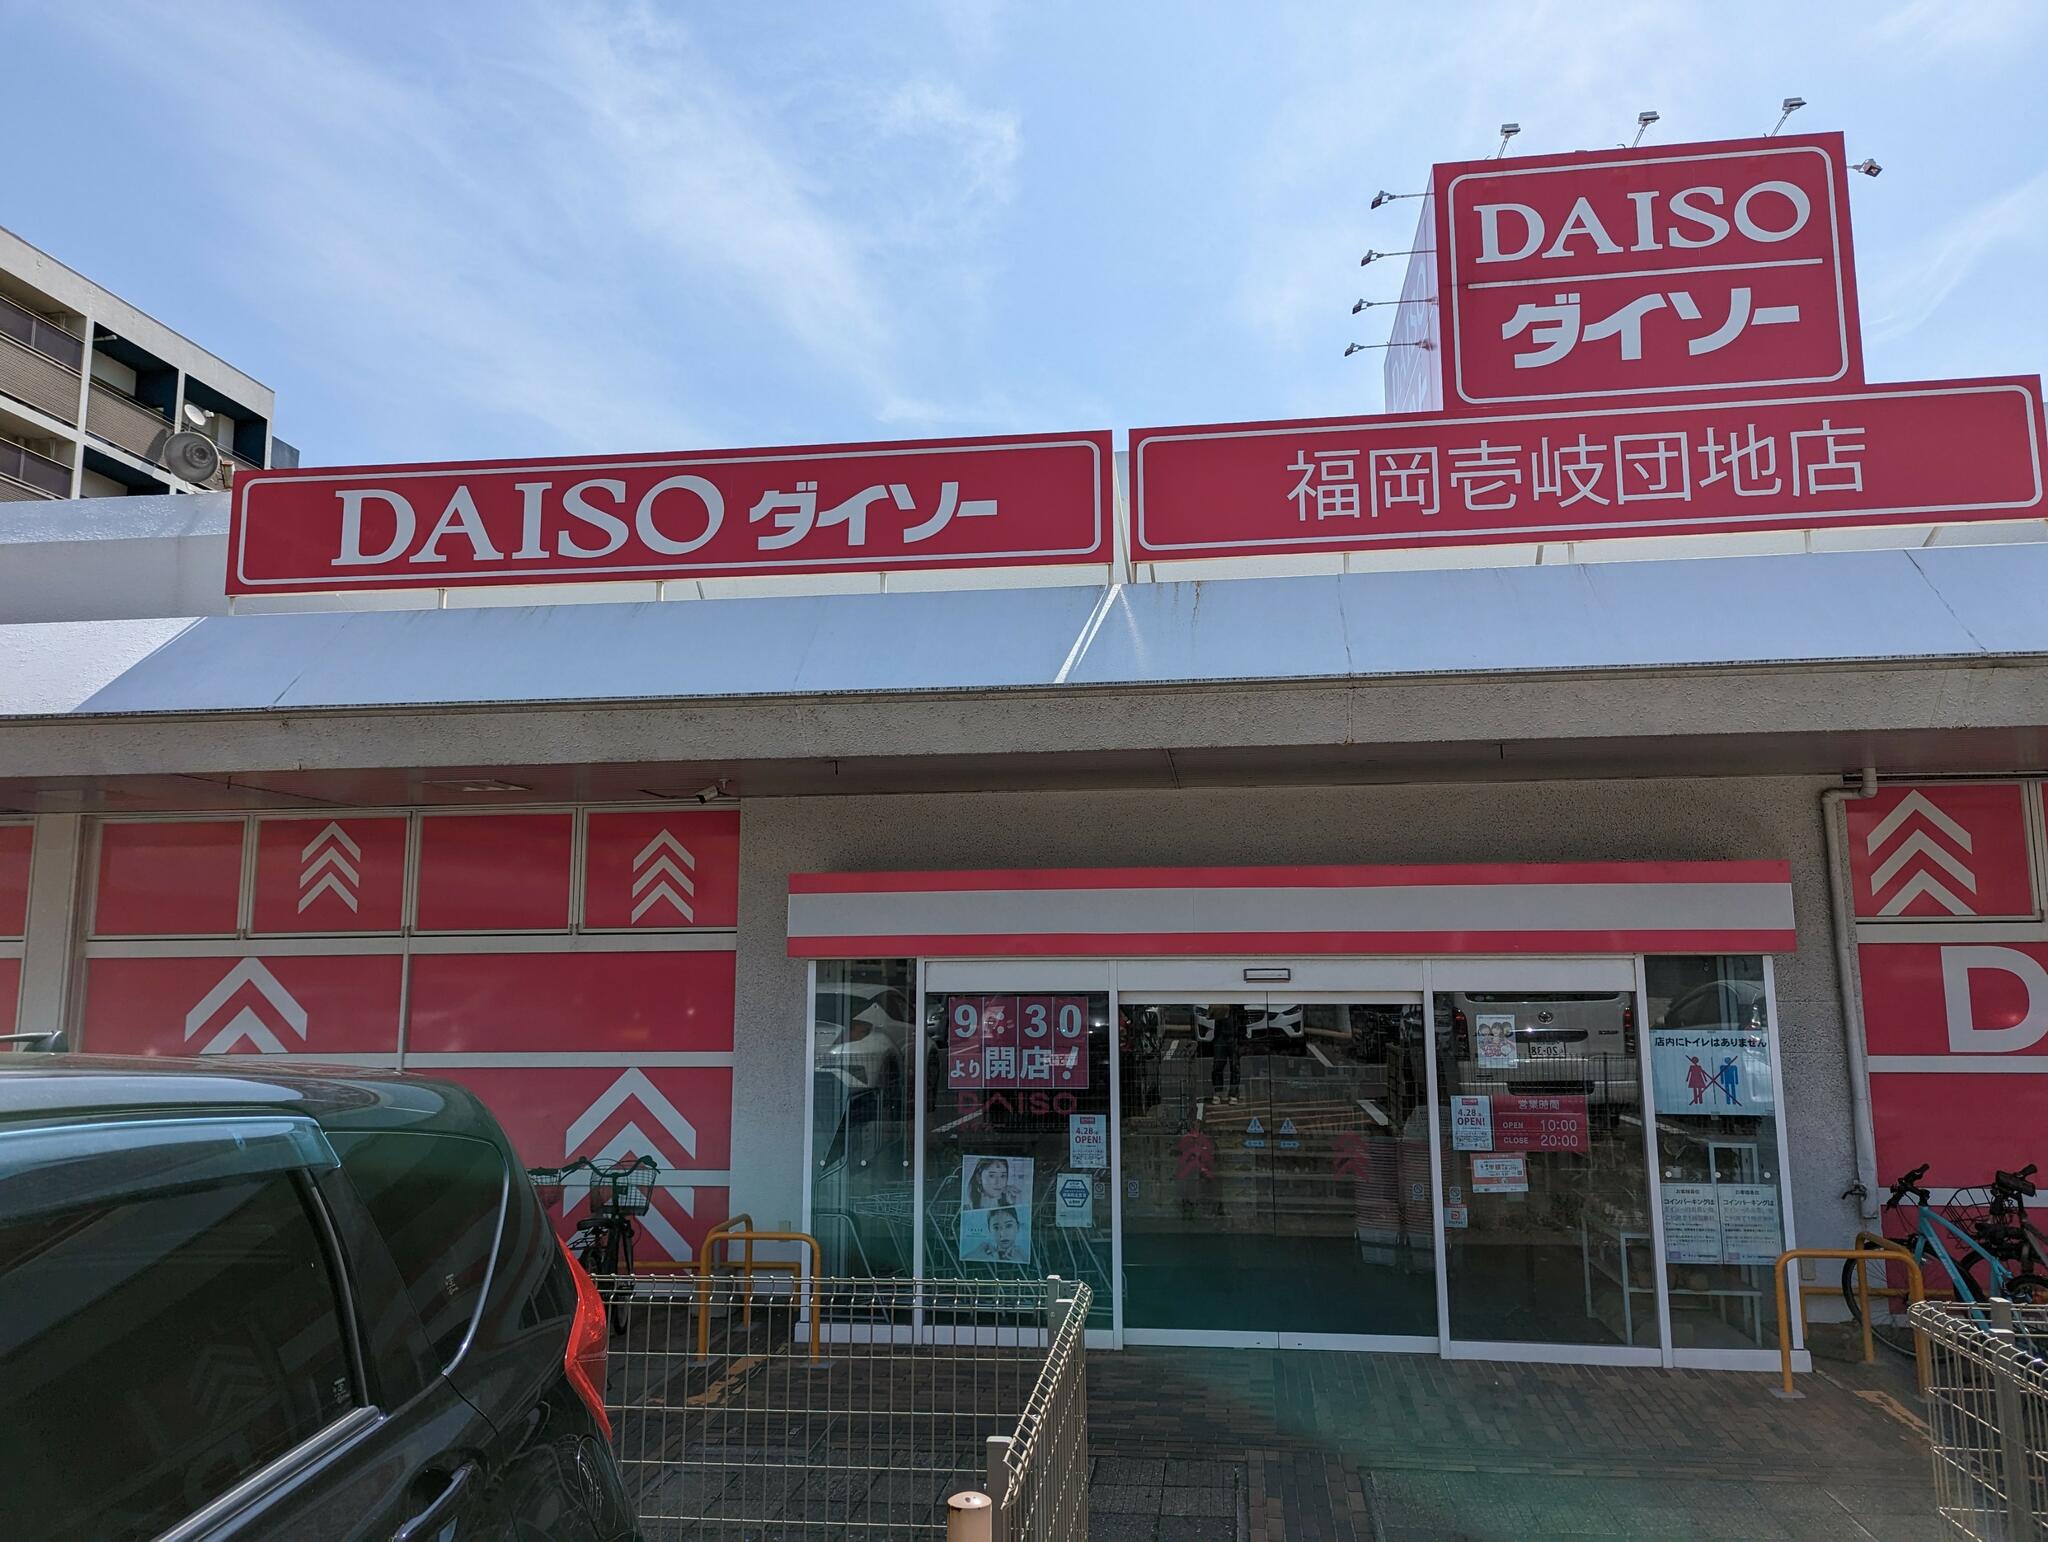 DAISO 福岡壱岐団地店の代表写真1